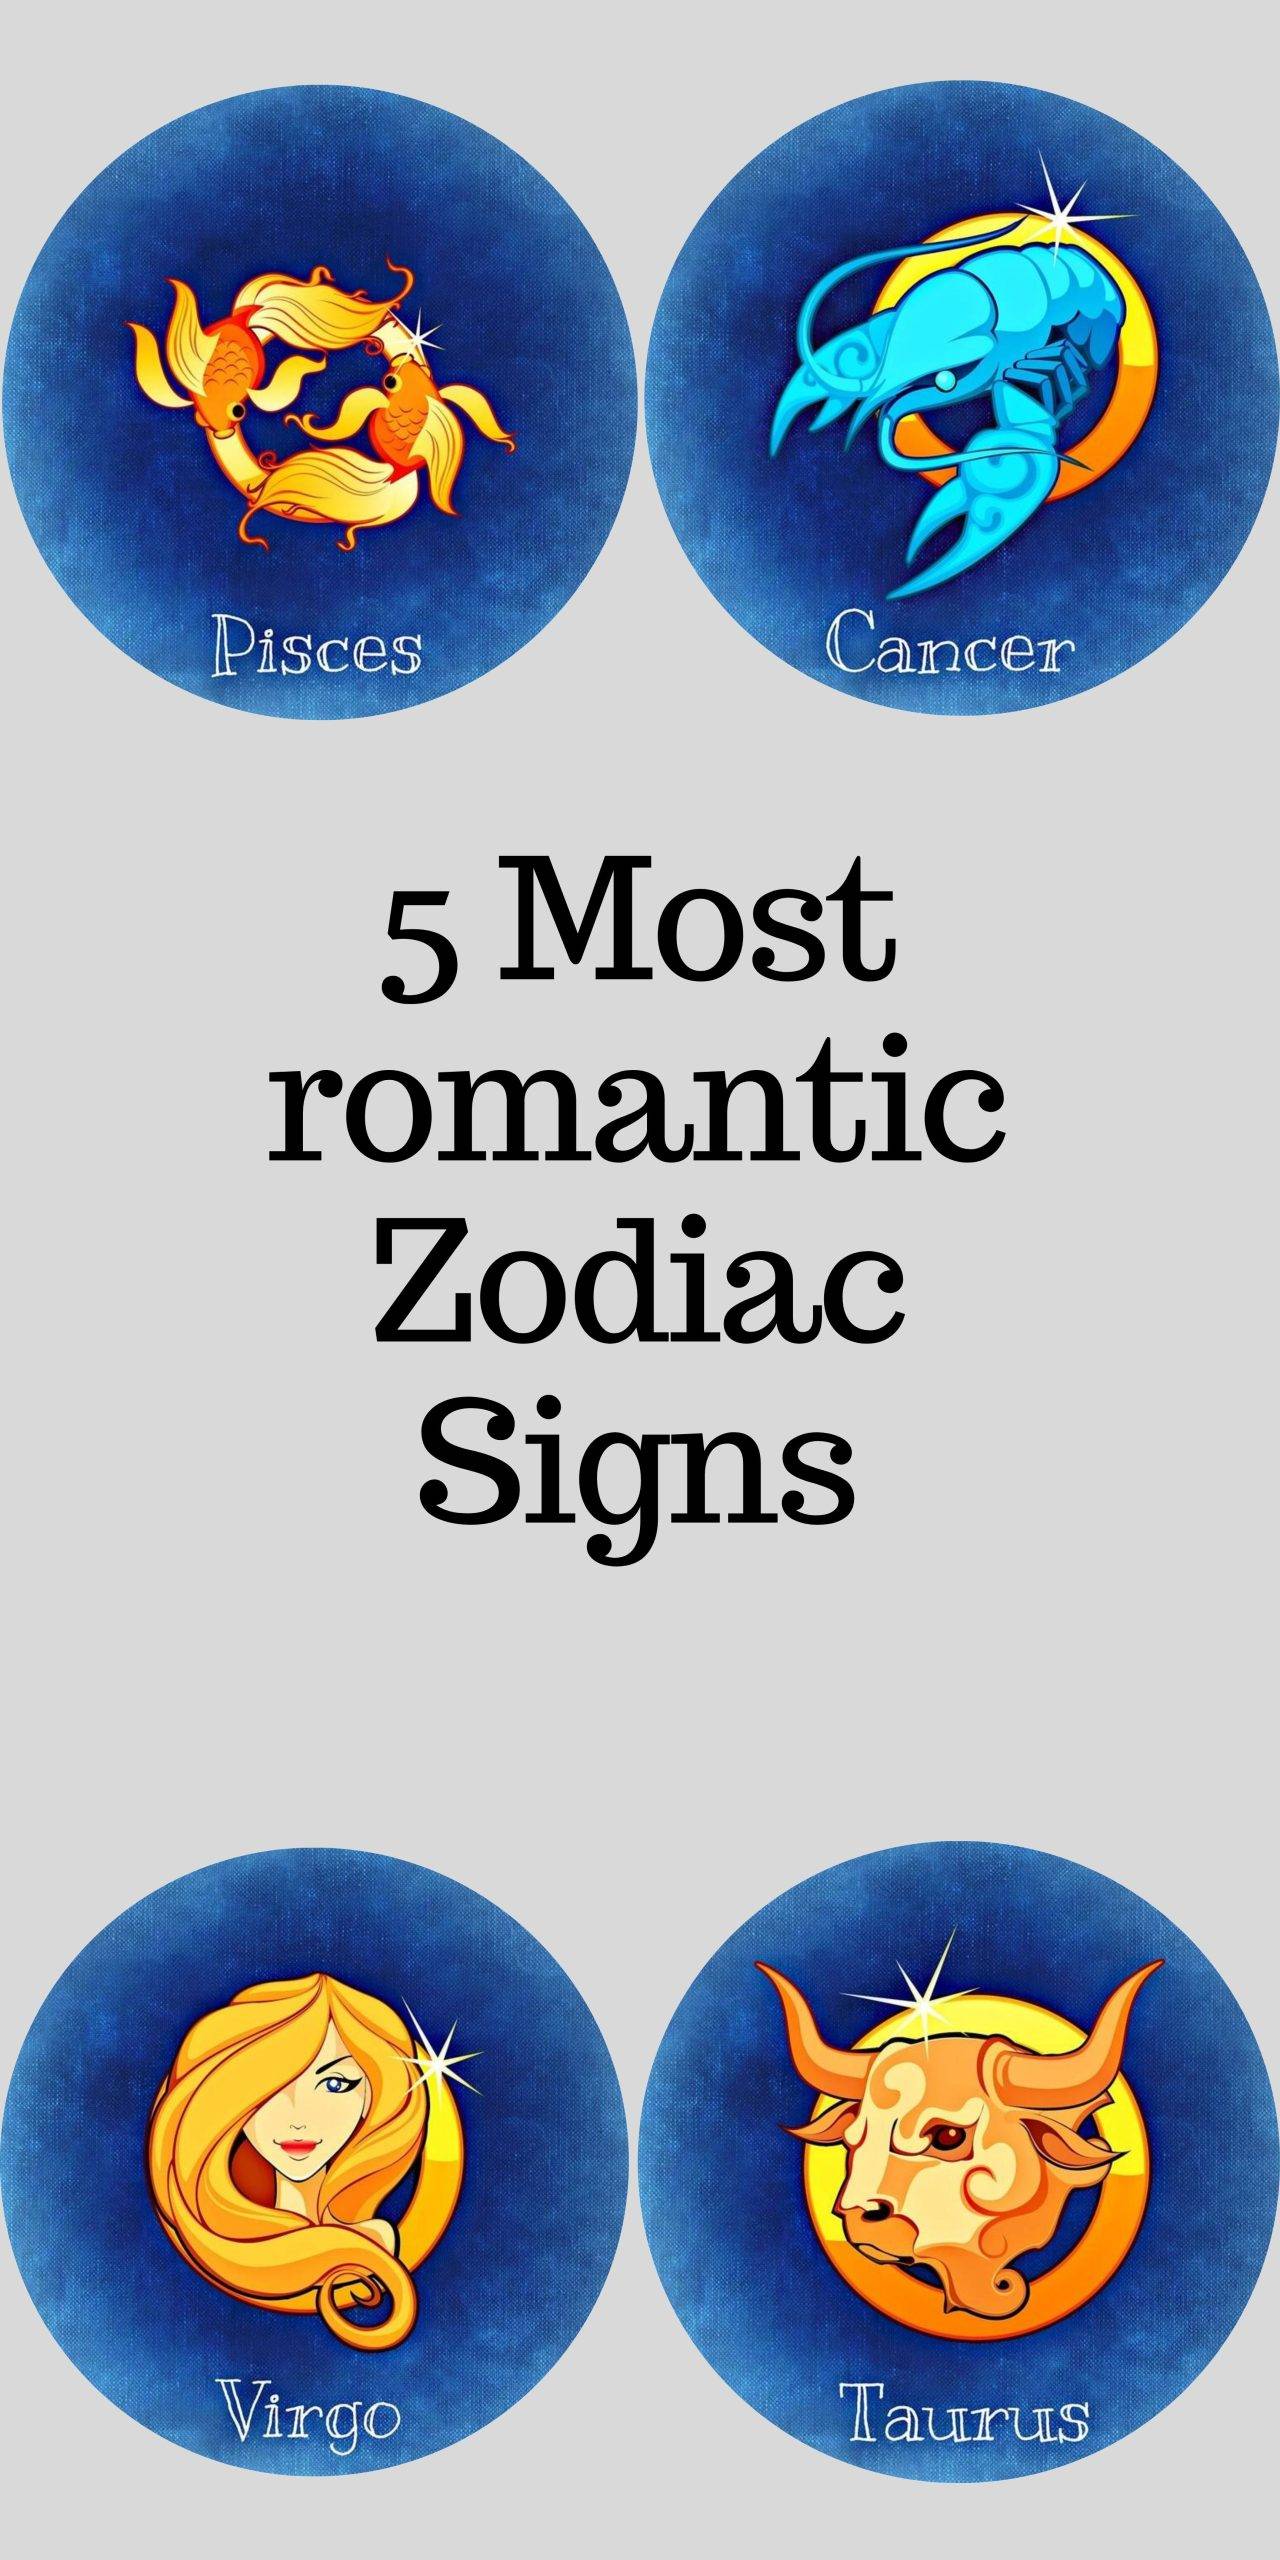 5 Most romantic zodiac signs